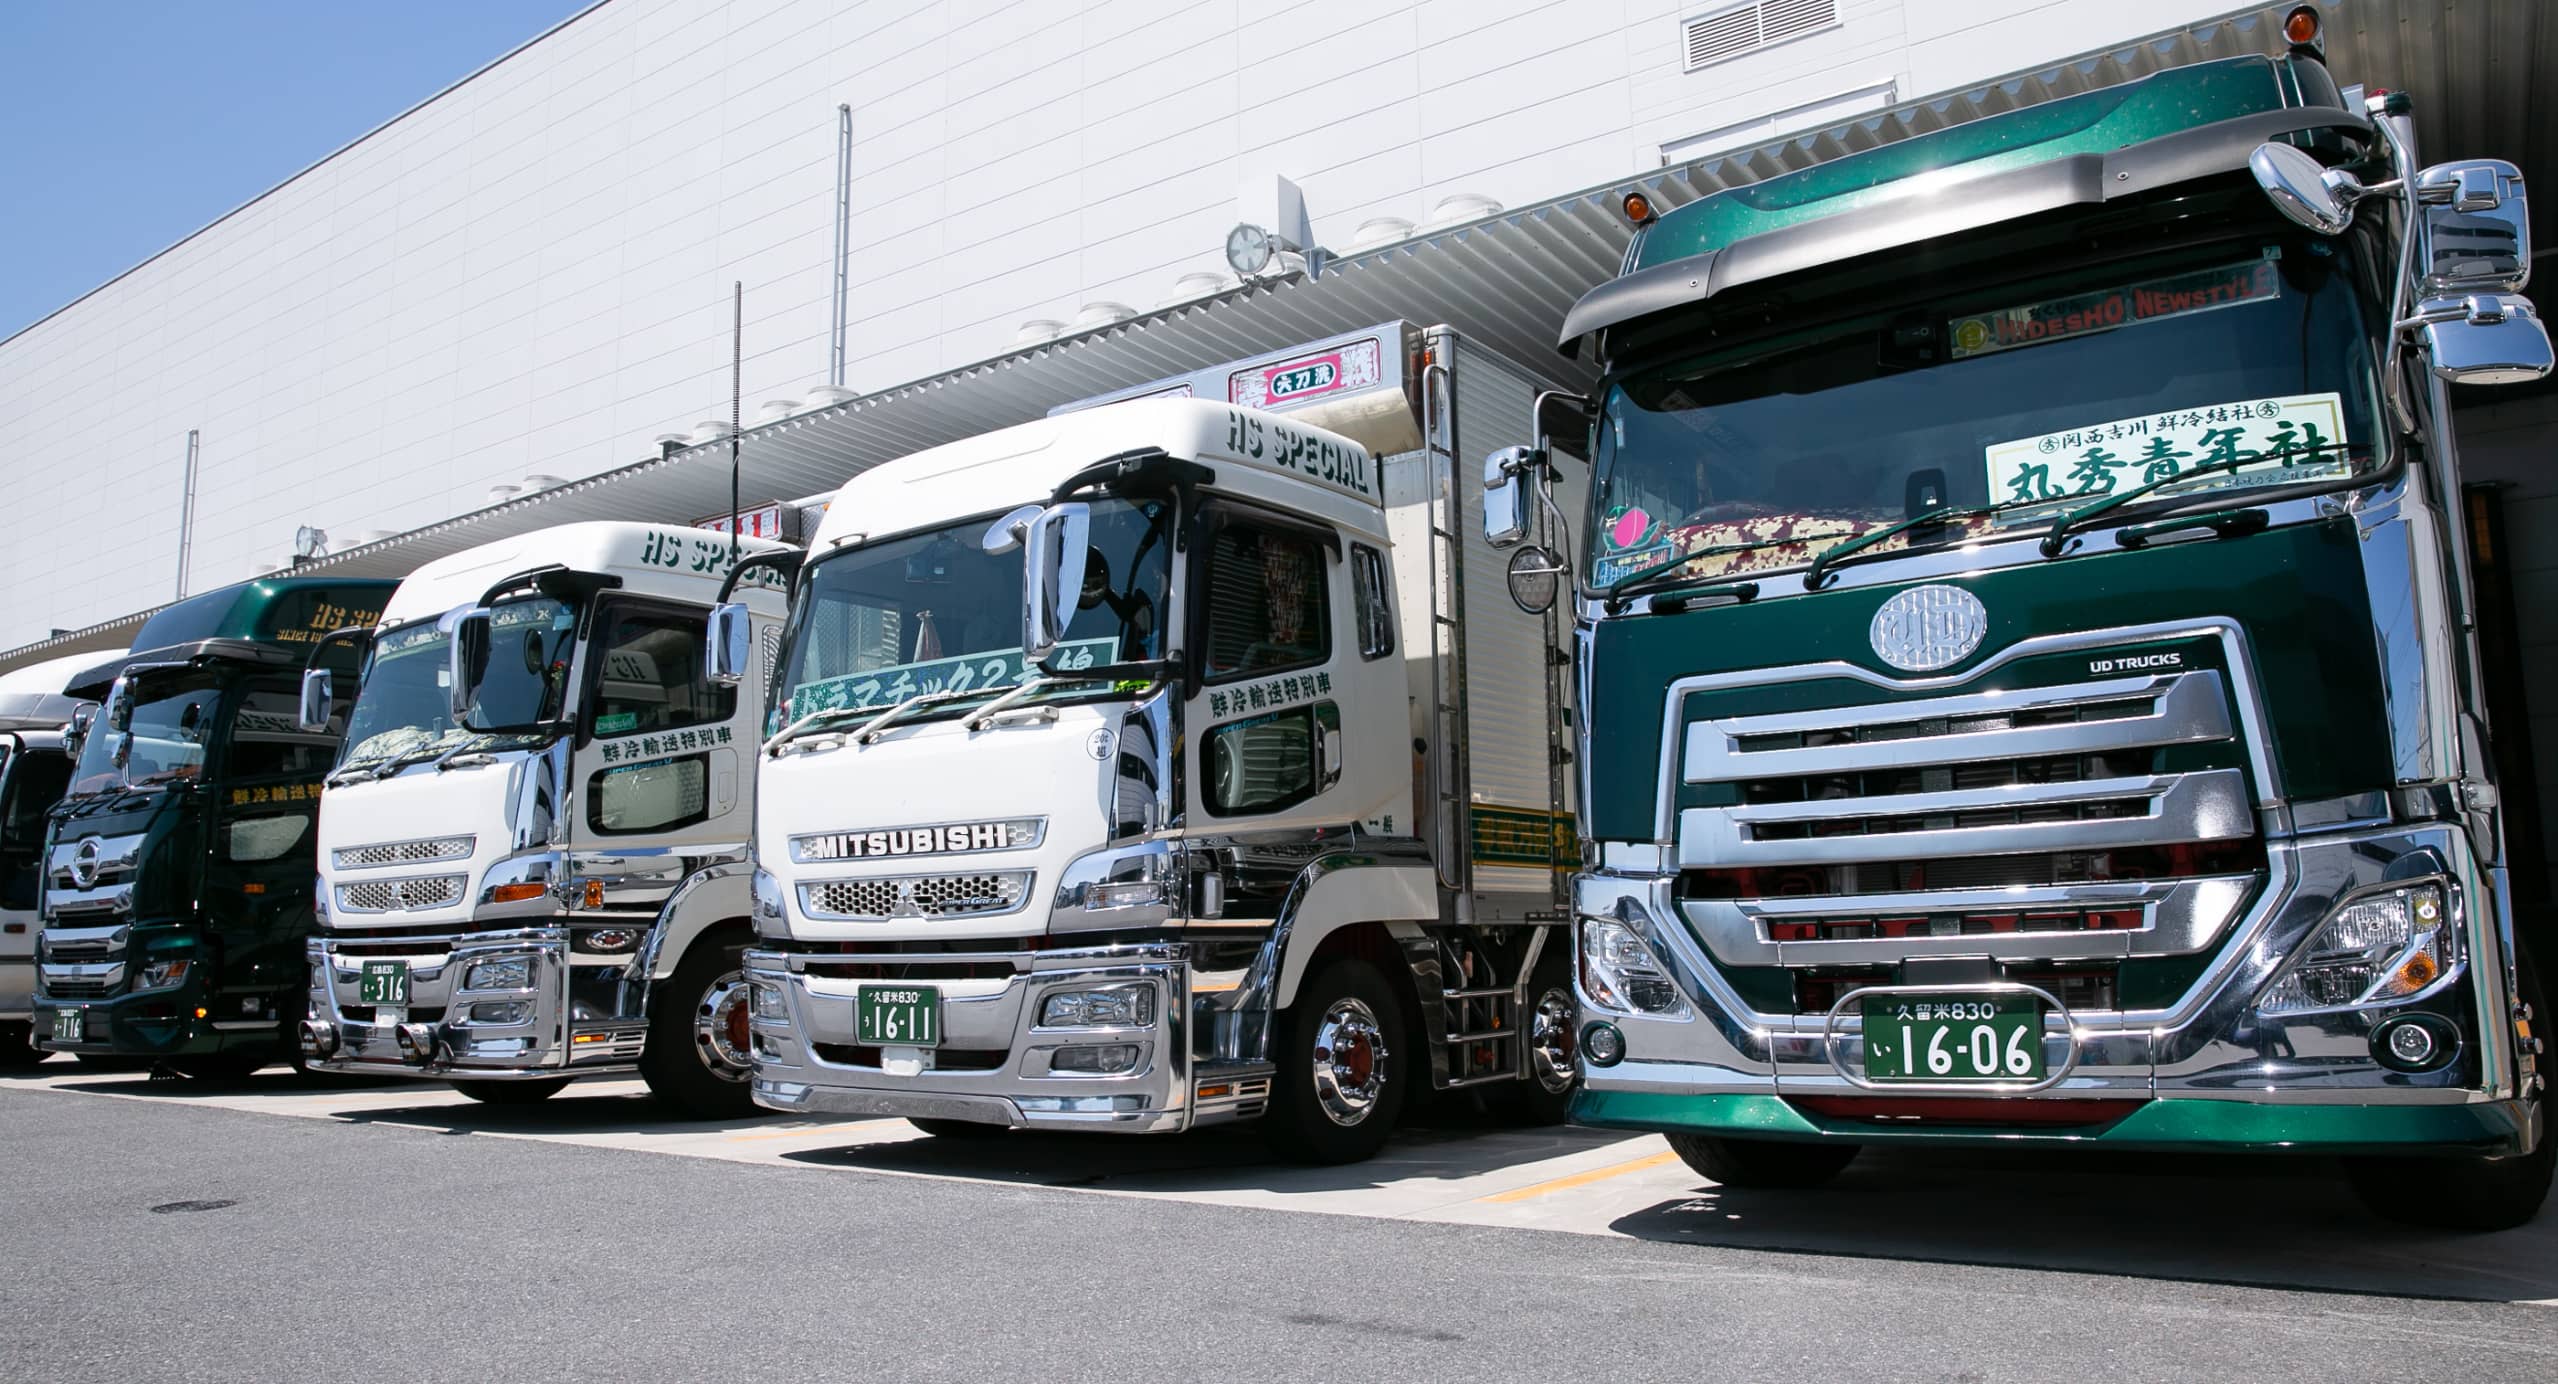 事業内容 公式 食品物流の株式会社秀商 福岡 広島 神戸でチルド食品 生鮮食品輸送を行う会社